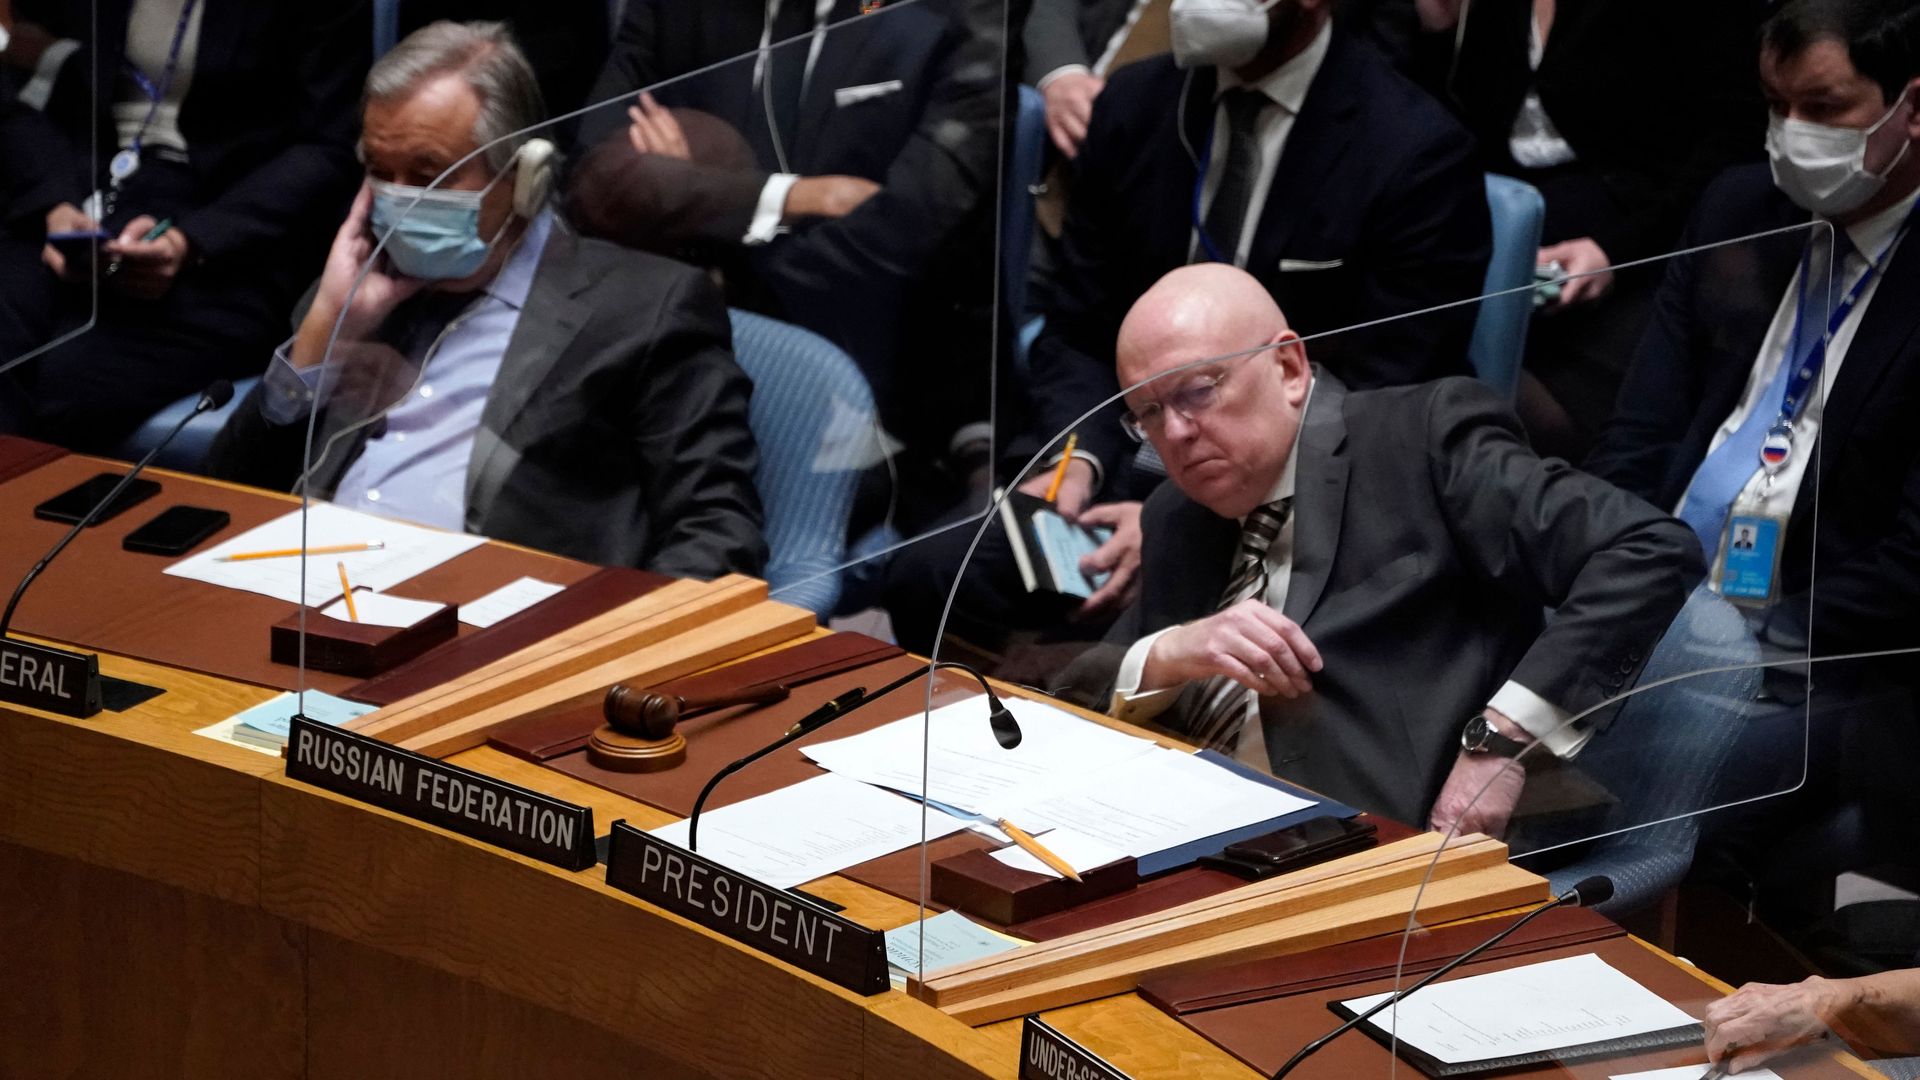 The Russian ambassador to the U.N. is seen sitting next to the U.N. secretary-general.